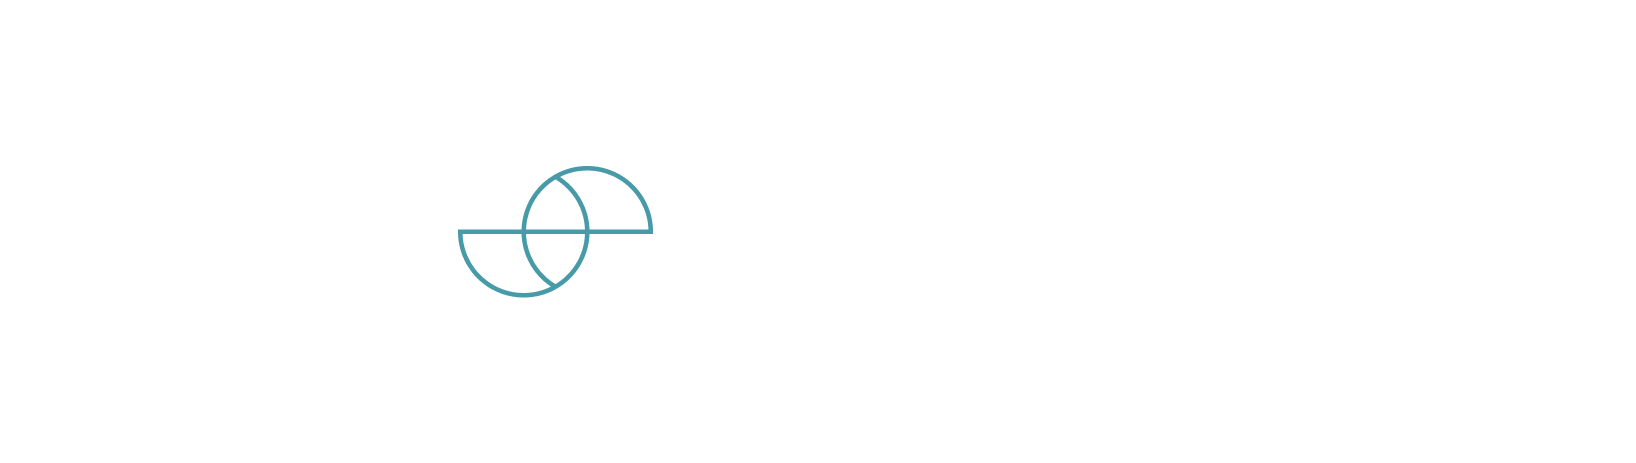 Sanjeeth Shetty - logo design